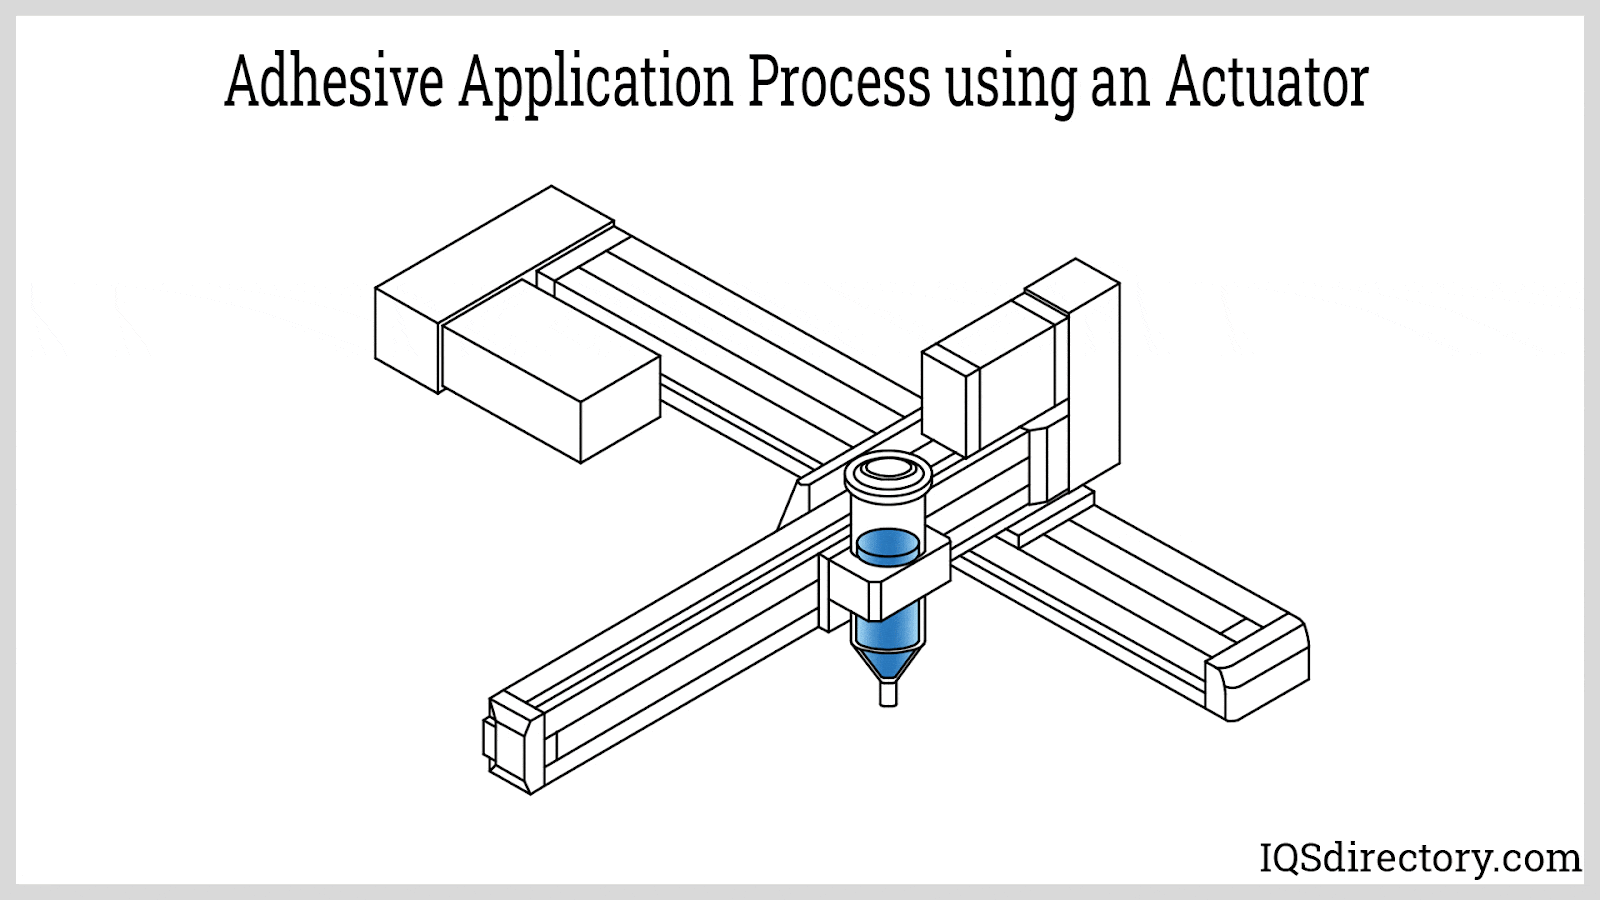 Adhesive Application Process using an Actuator